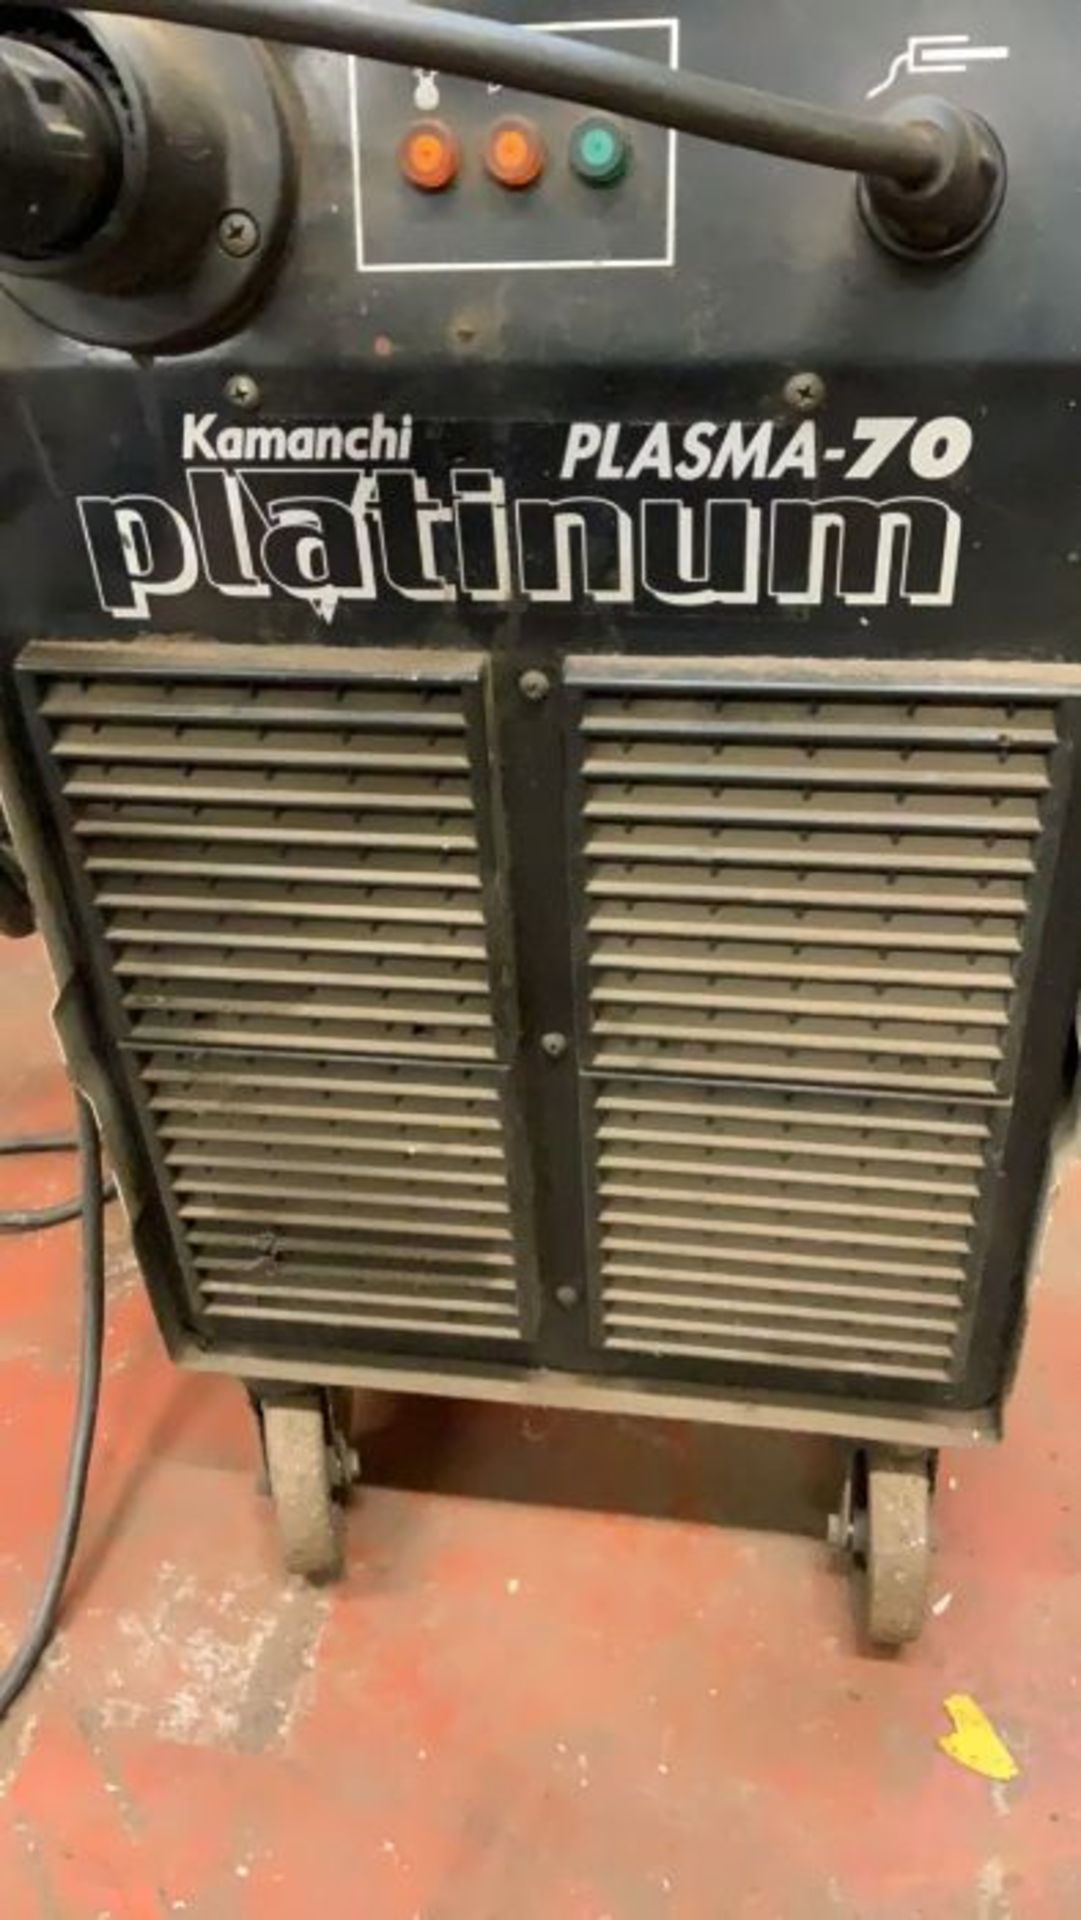 Kamanchi Platinum Plasma 70 Plasma Cutter, Serial No. G-01-500389 - Image 2 of 26